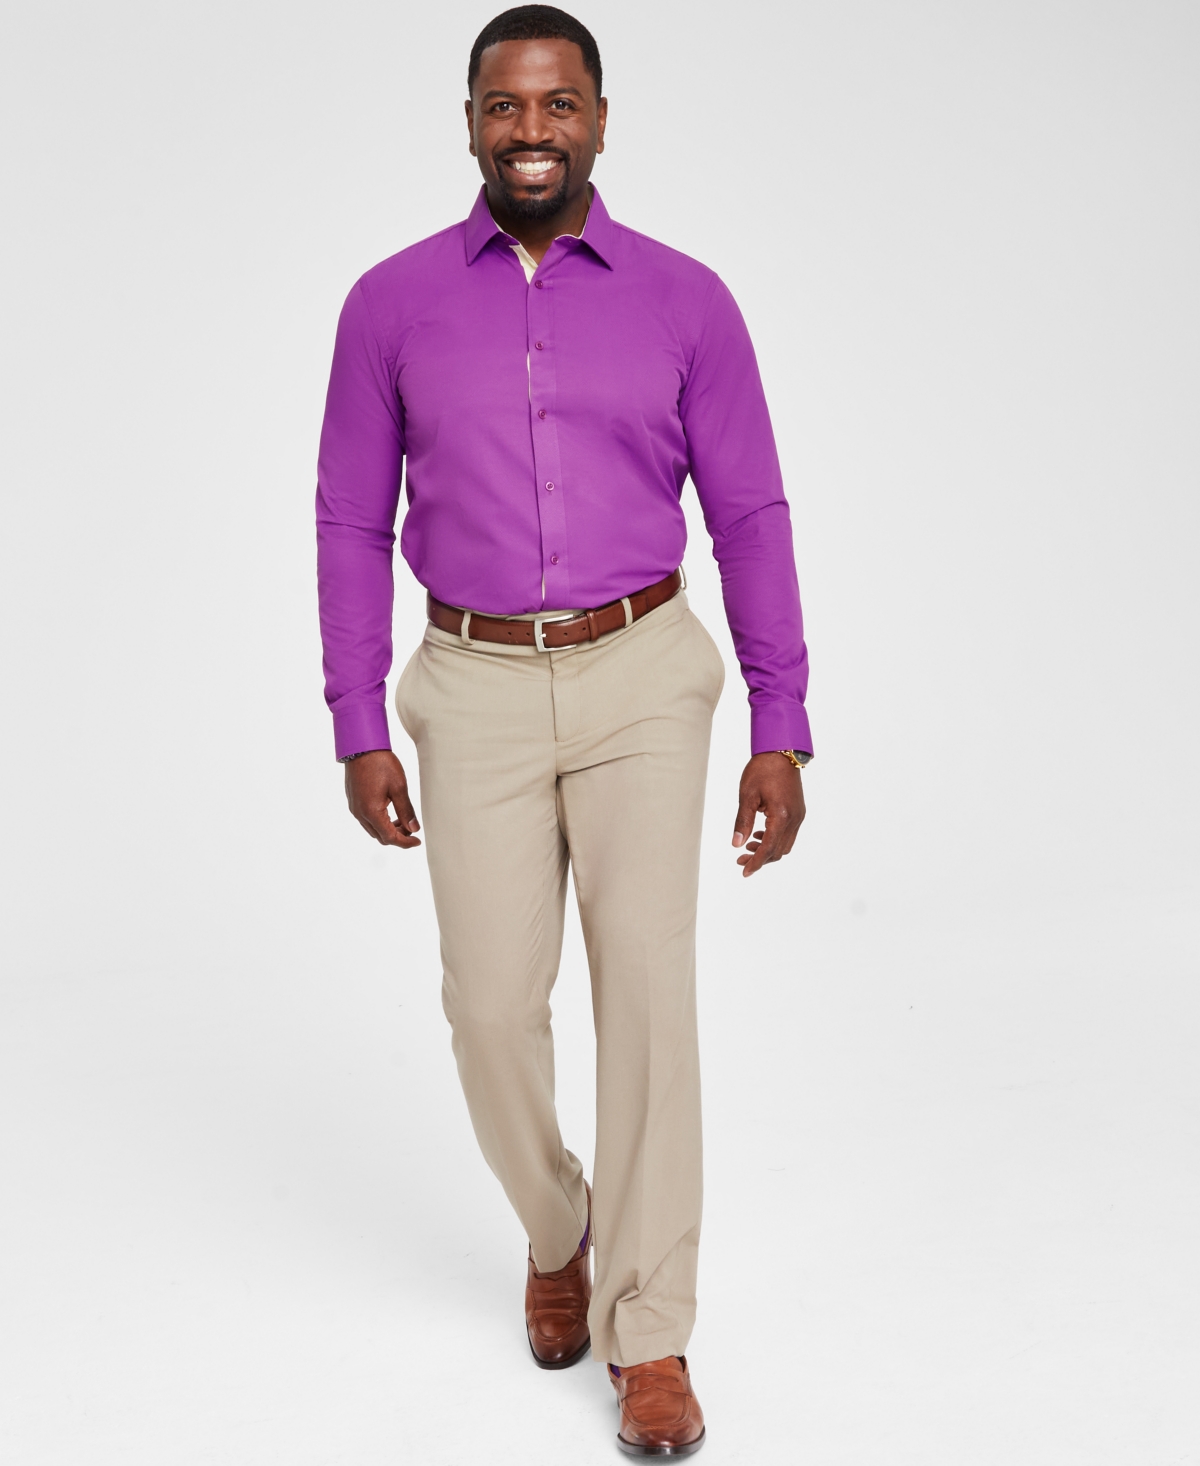 Men's Slim-Fit Gold Trim Solid Dress Shirt - Purple And Gold